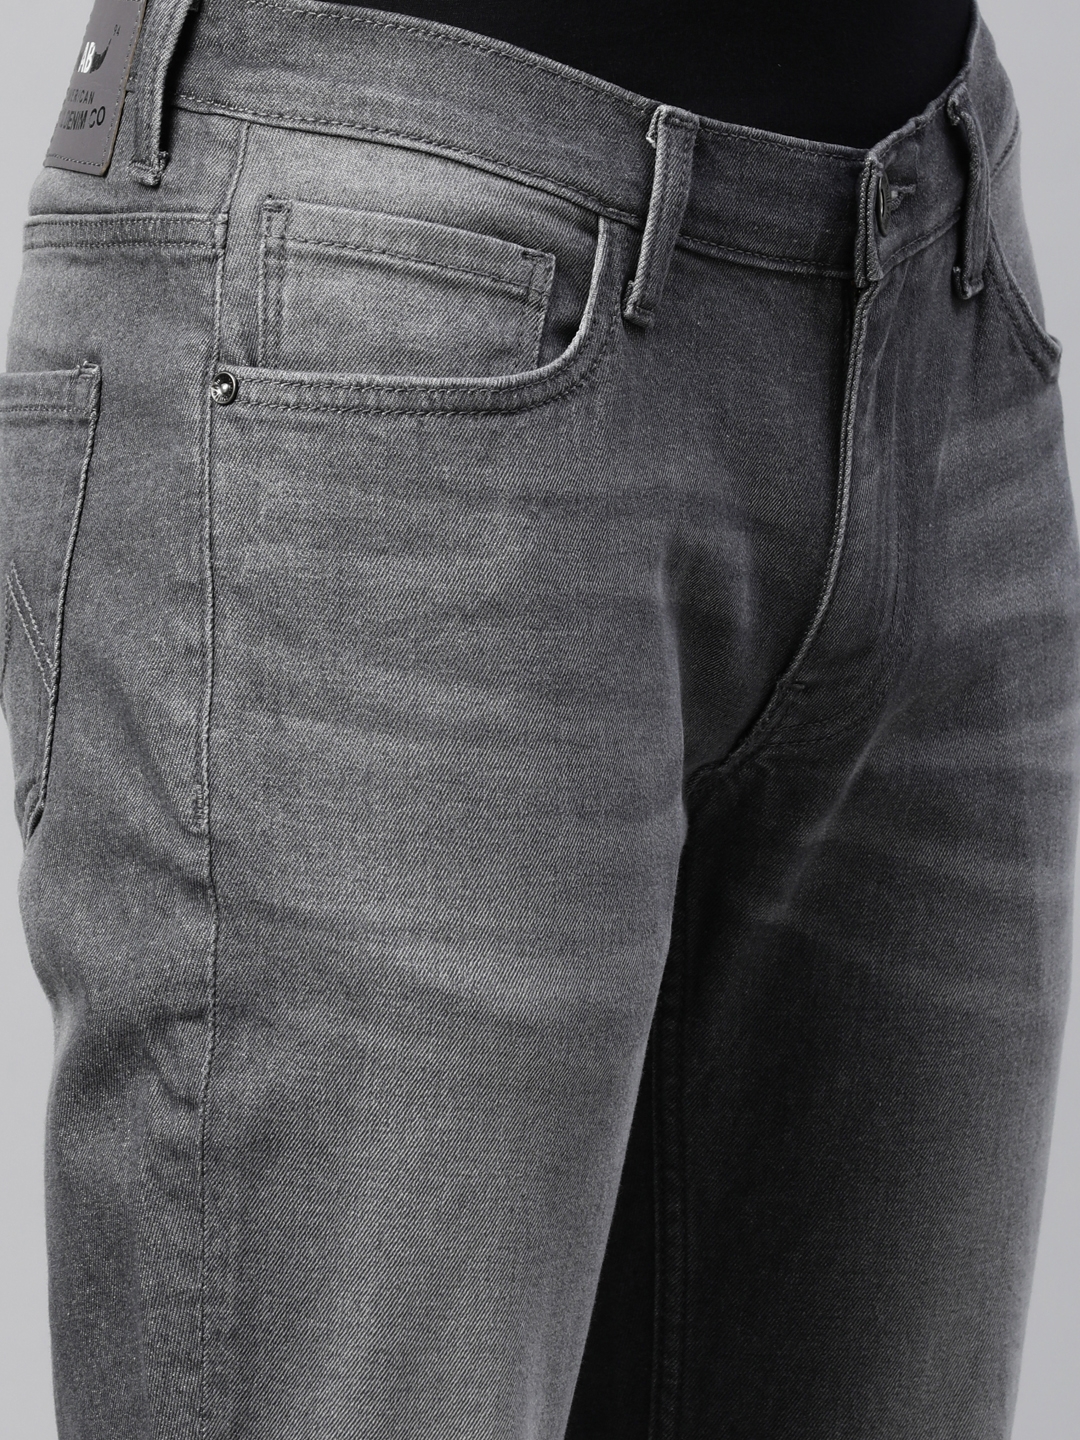 American Bull Mens Solid Ankle Length Denim Jeans